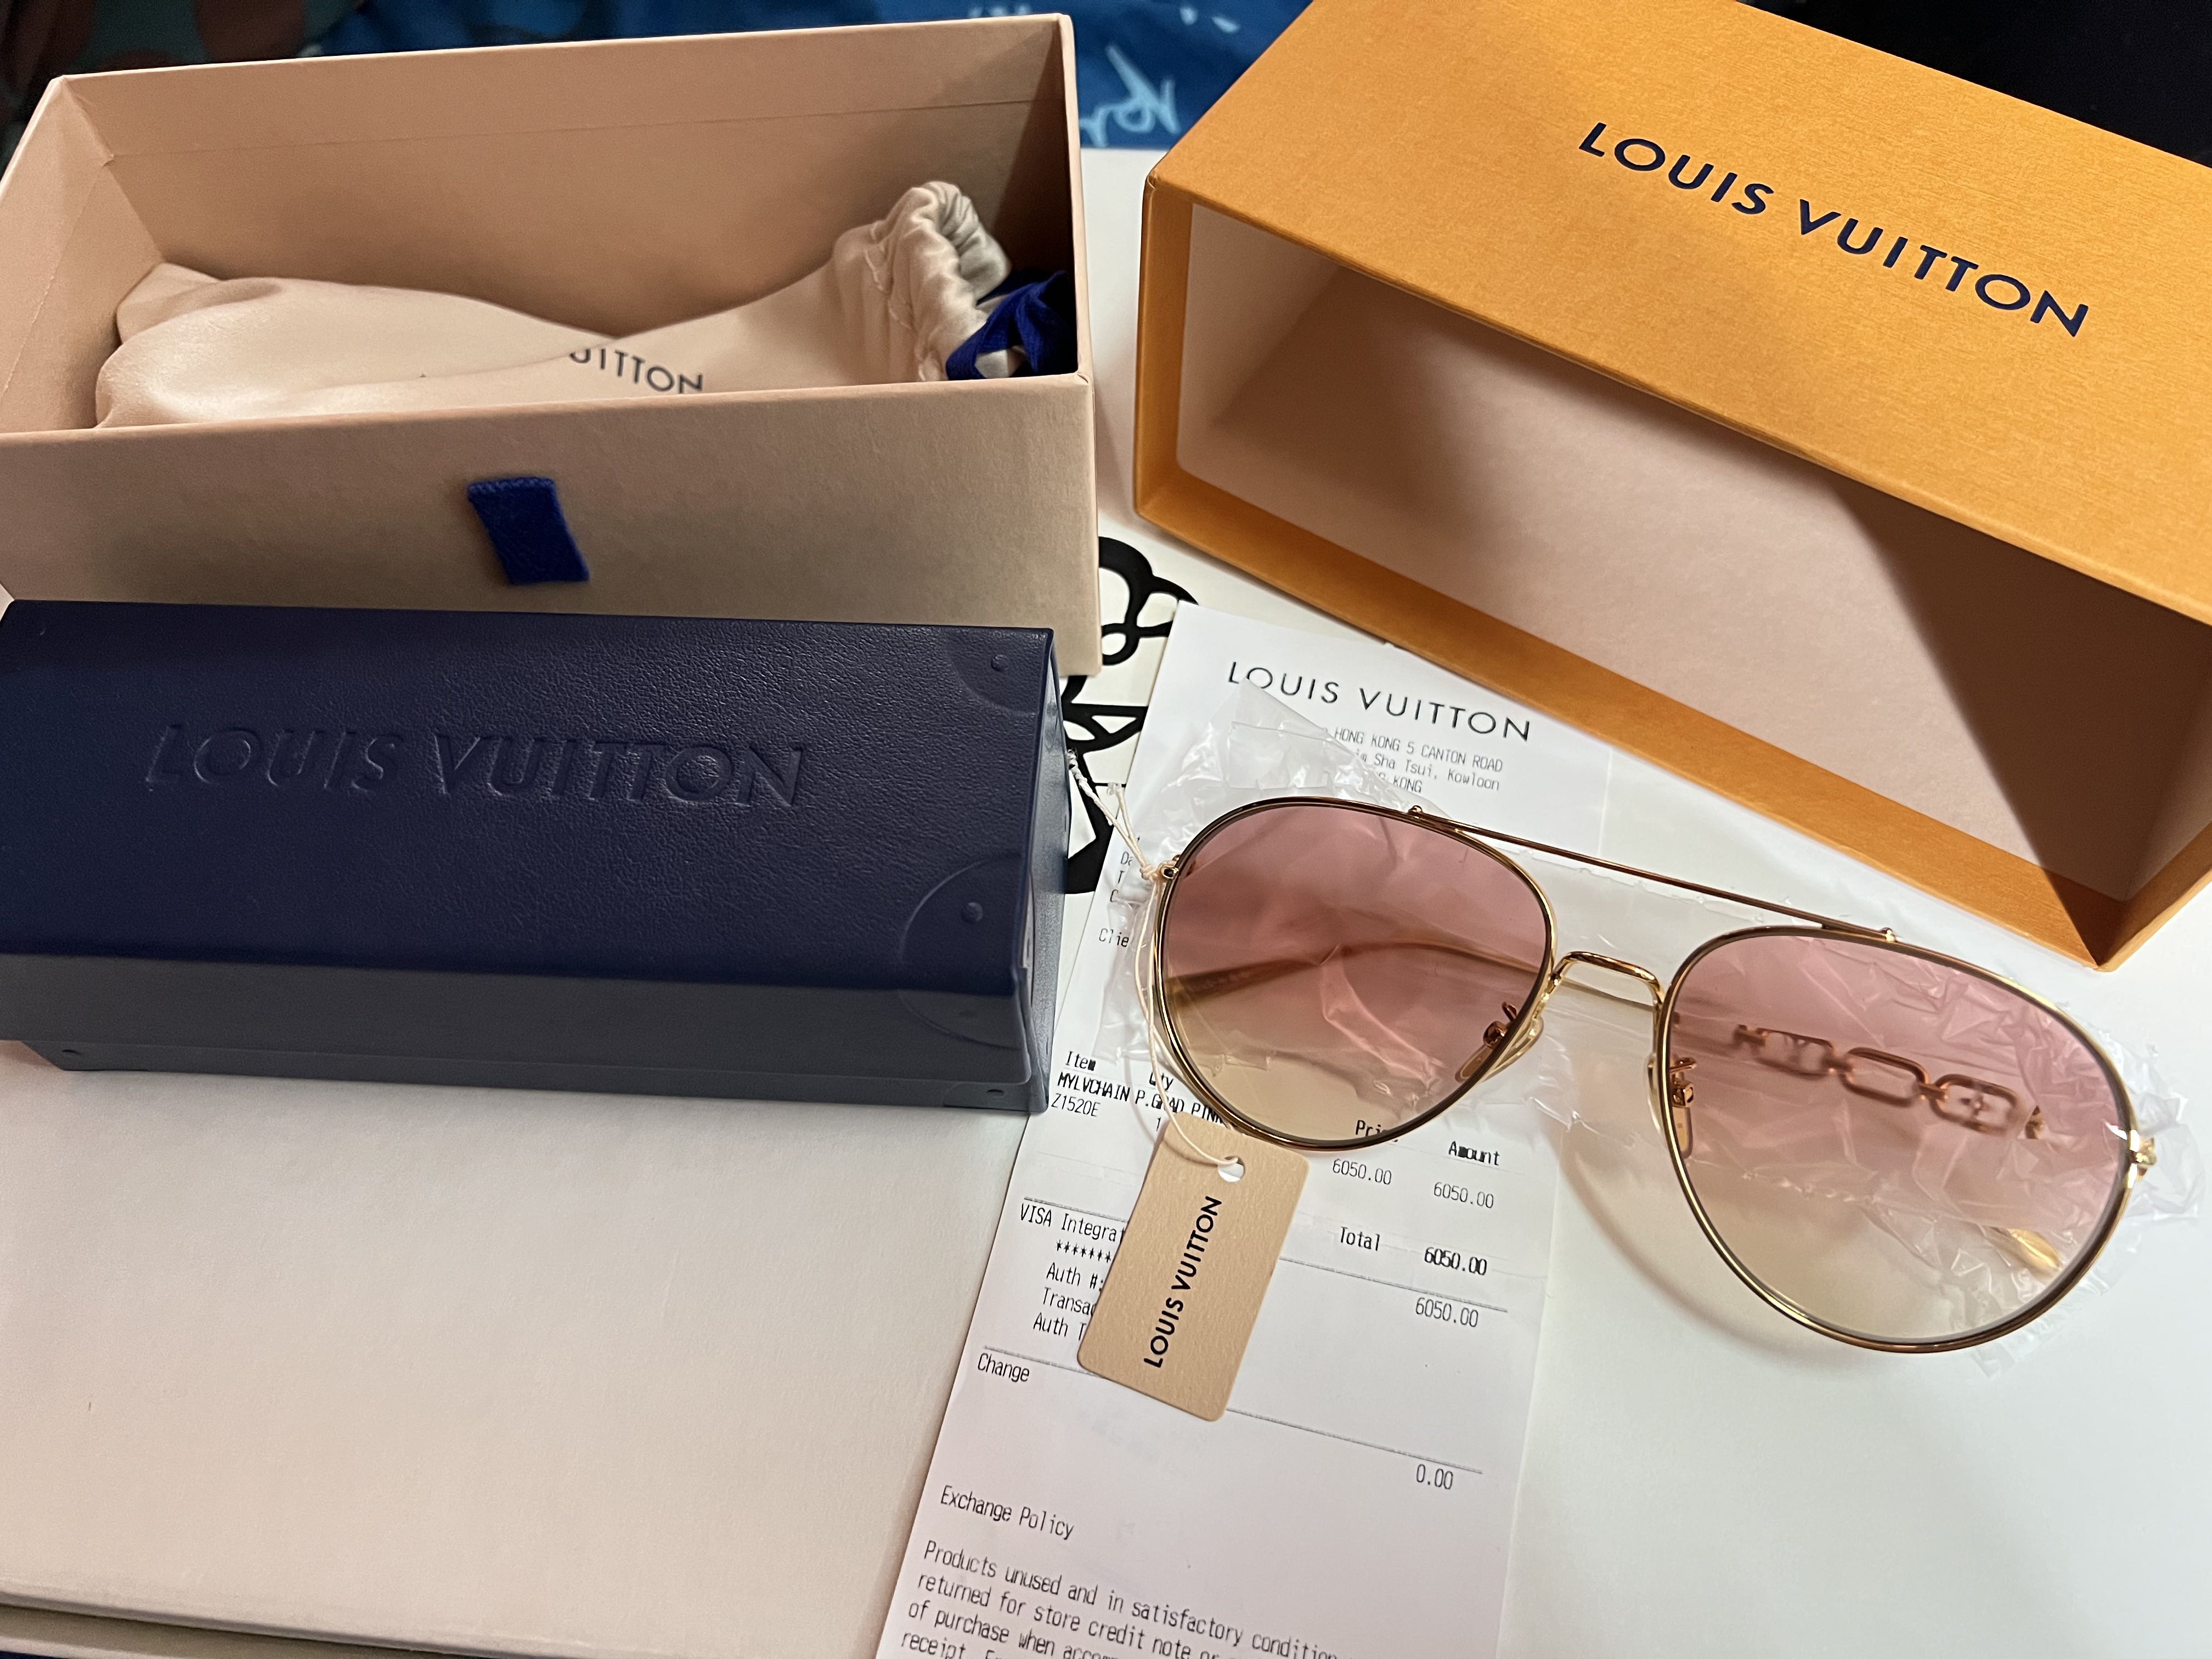 Louis Vuitton My LV Chain Pilot Sunglasses, Pink